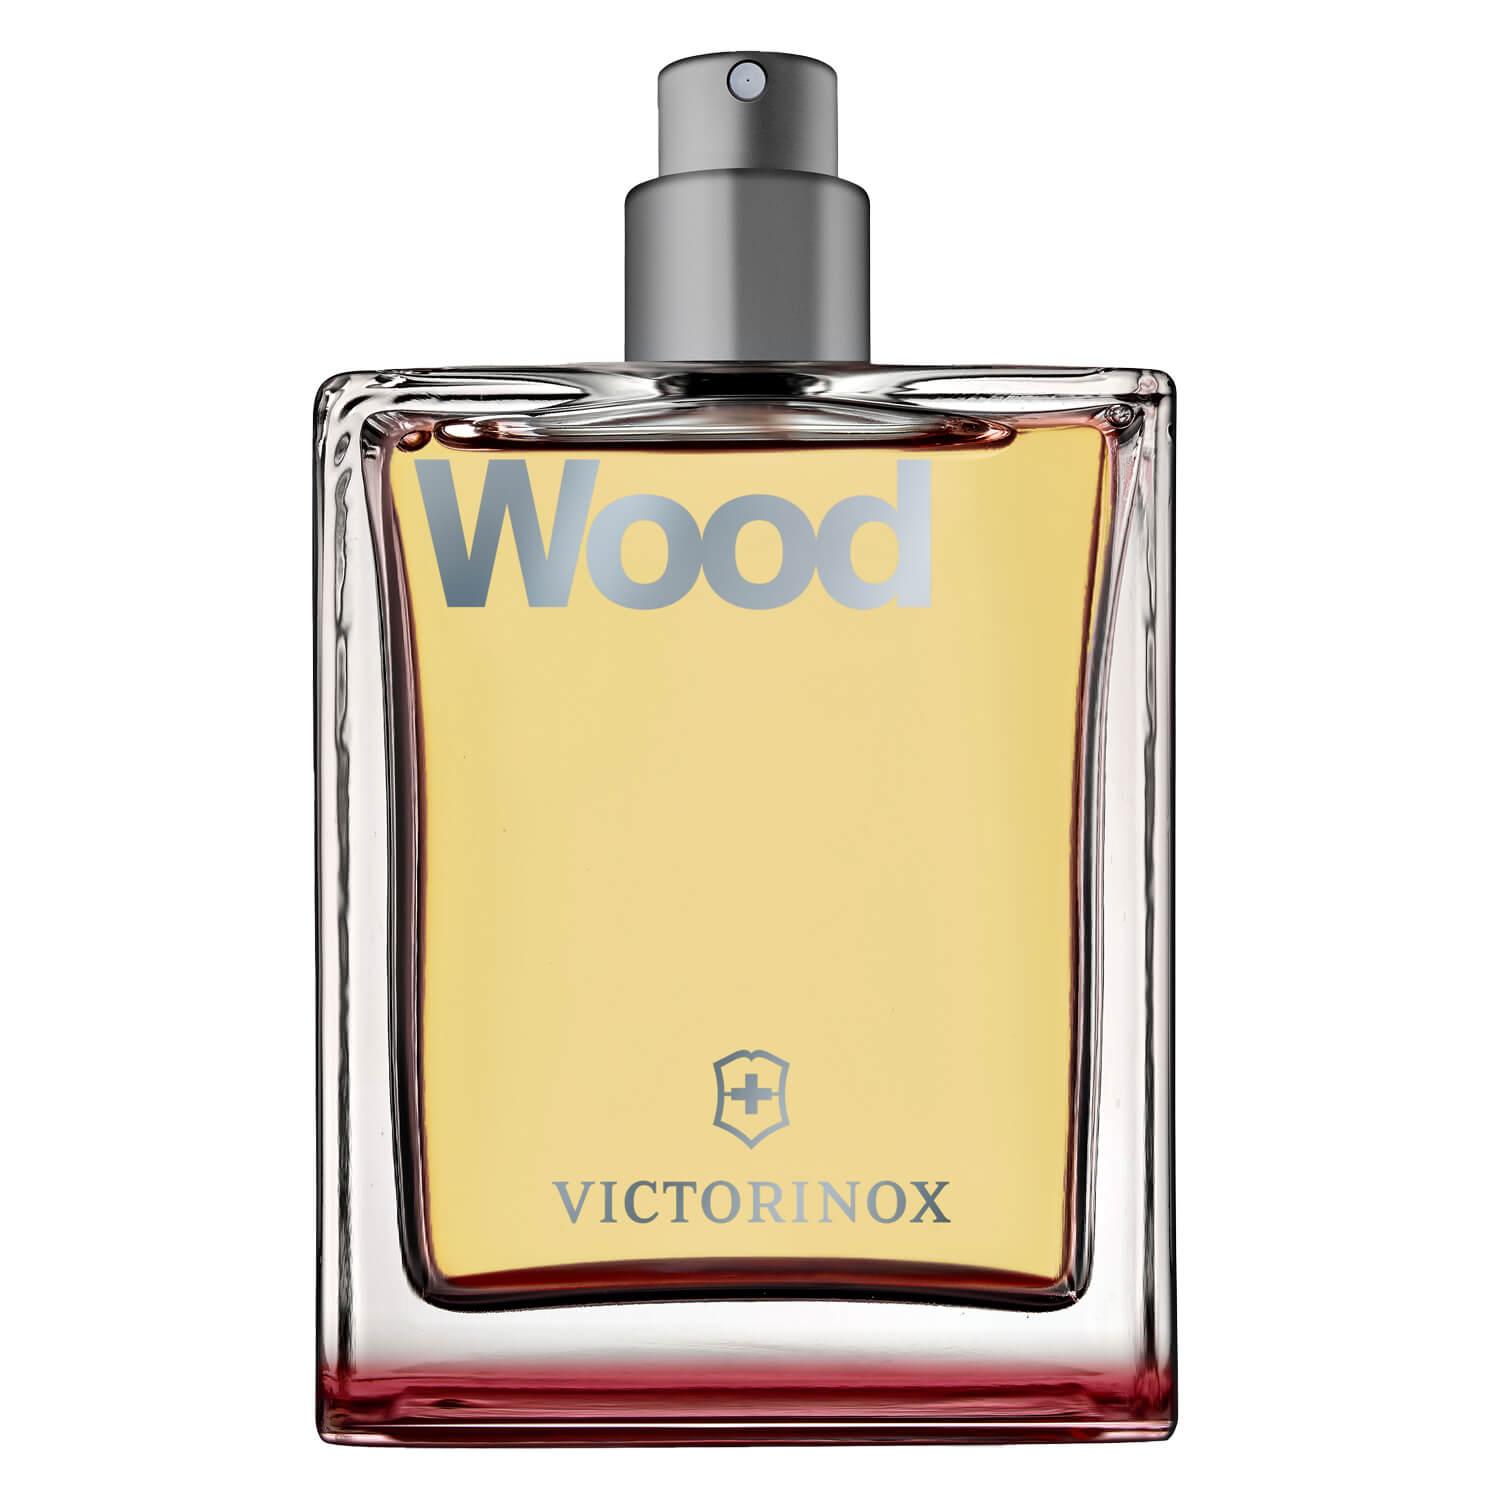 Victorinox - Wood Eau de Toilette